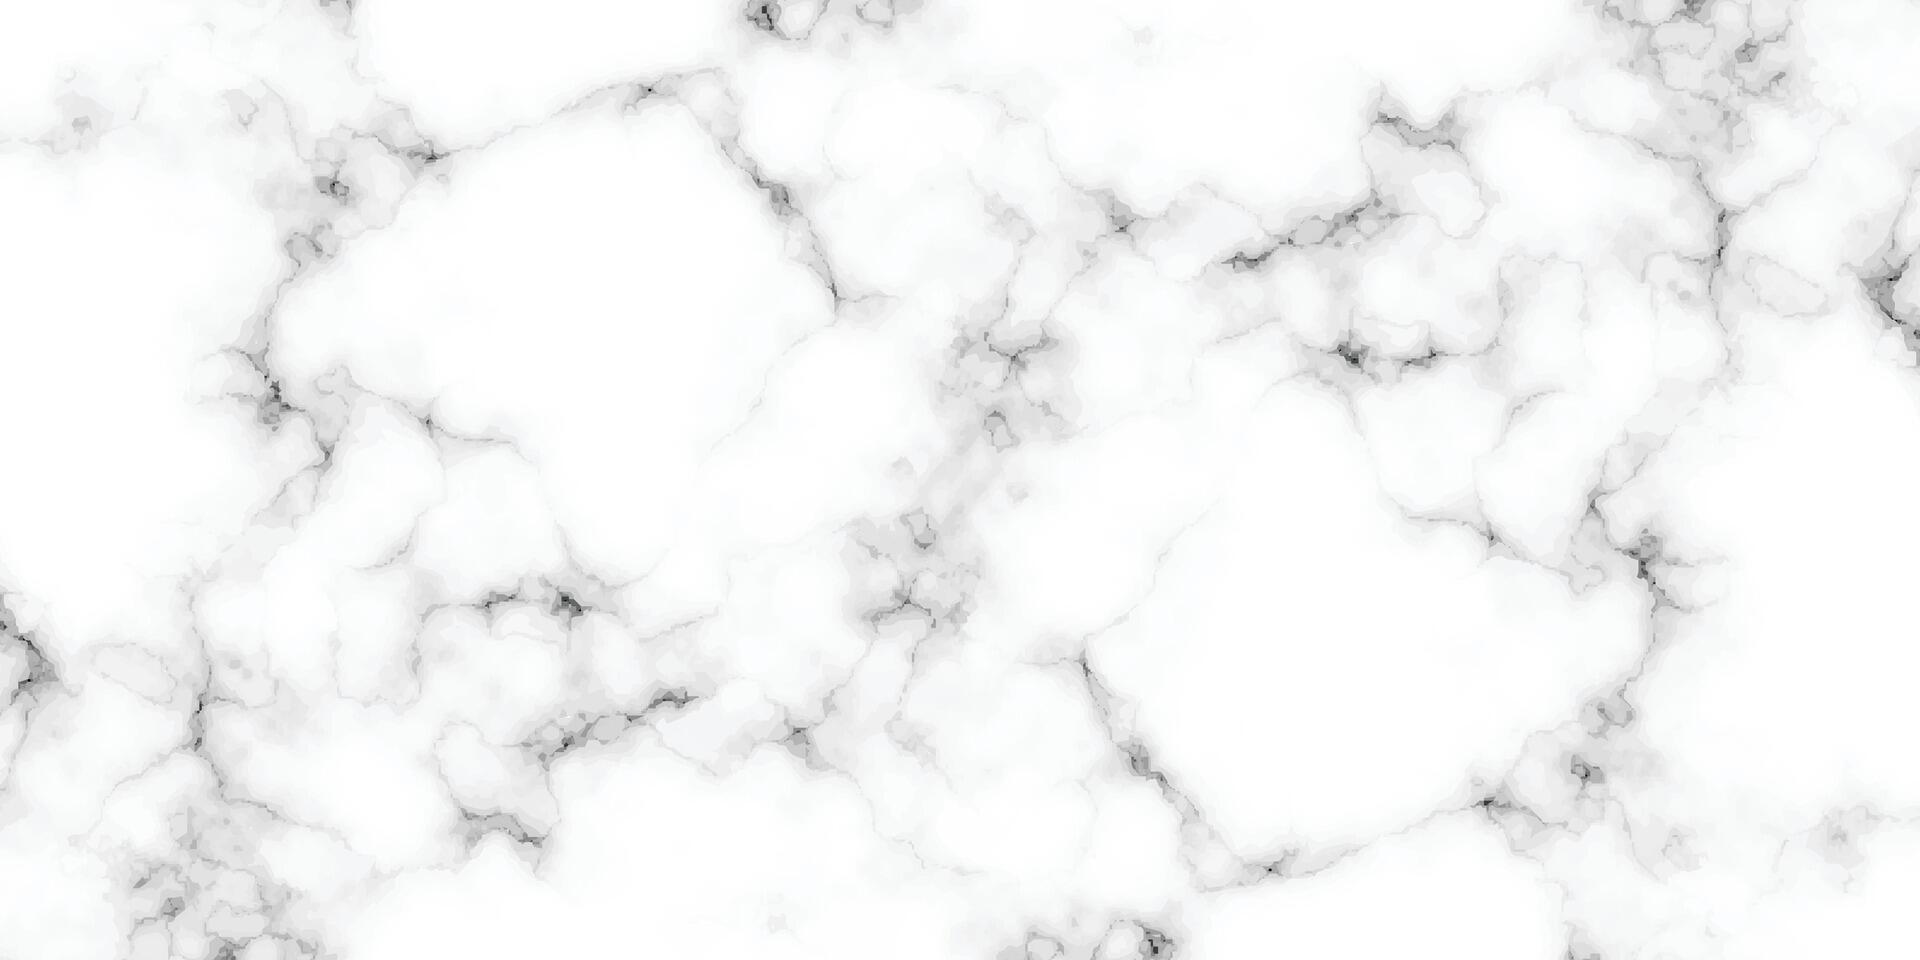 panoramisch wit marmeren steen textuur. wit marmeren structuur achtergrond. hoge resolutie wit carrara marmeren steen structuur vector